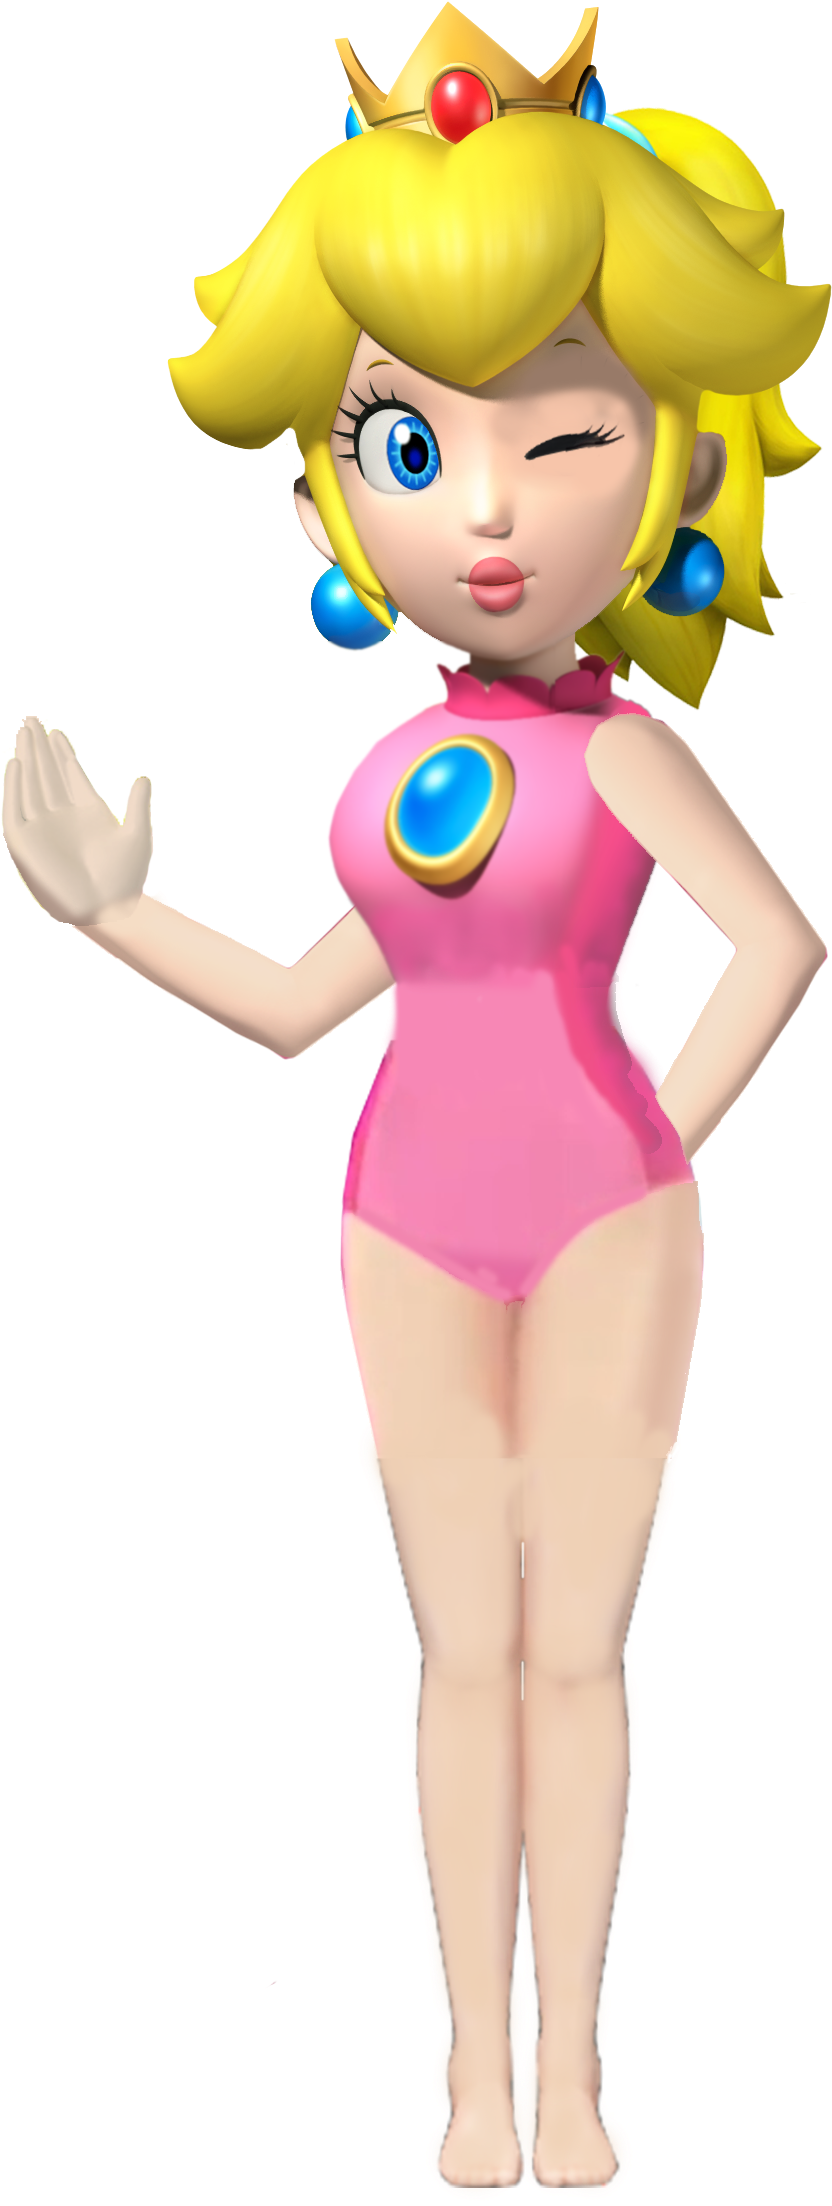 Princess Peach Swimsuit By Partypeach - Princess Peach In A Swimsuit (952x2229)